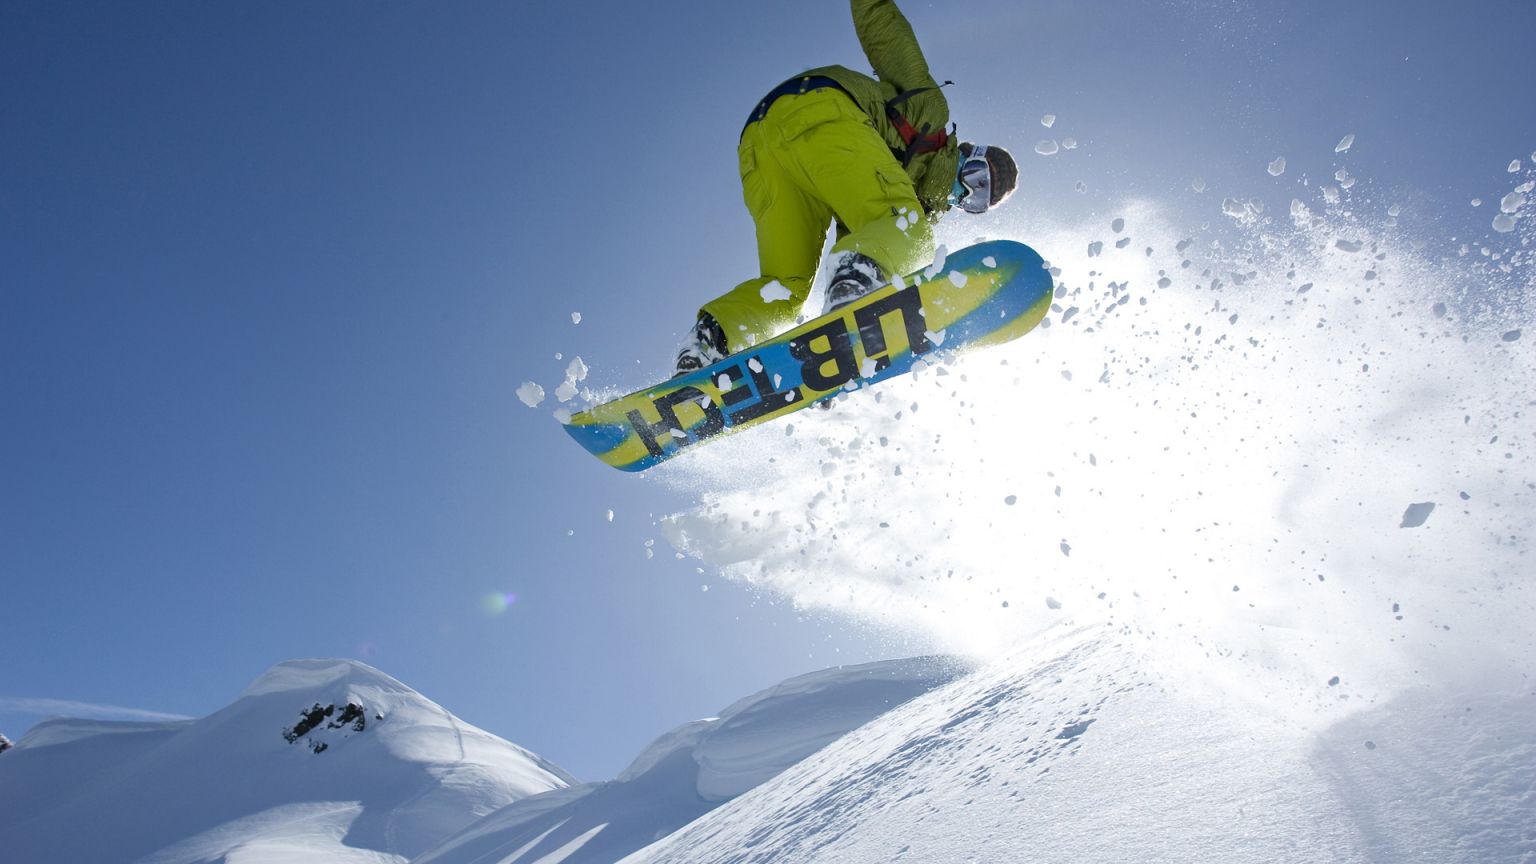 Burton Snowboard Wallpapers 4k Hd Burton Snowboard Backgrounds On Wallpaperbat